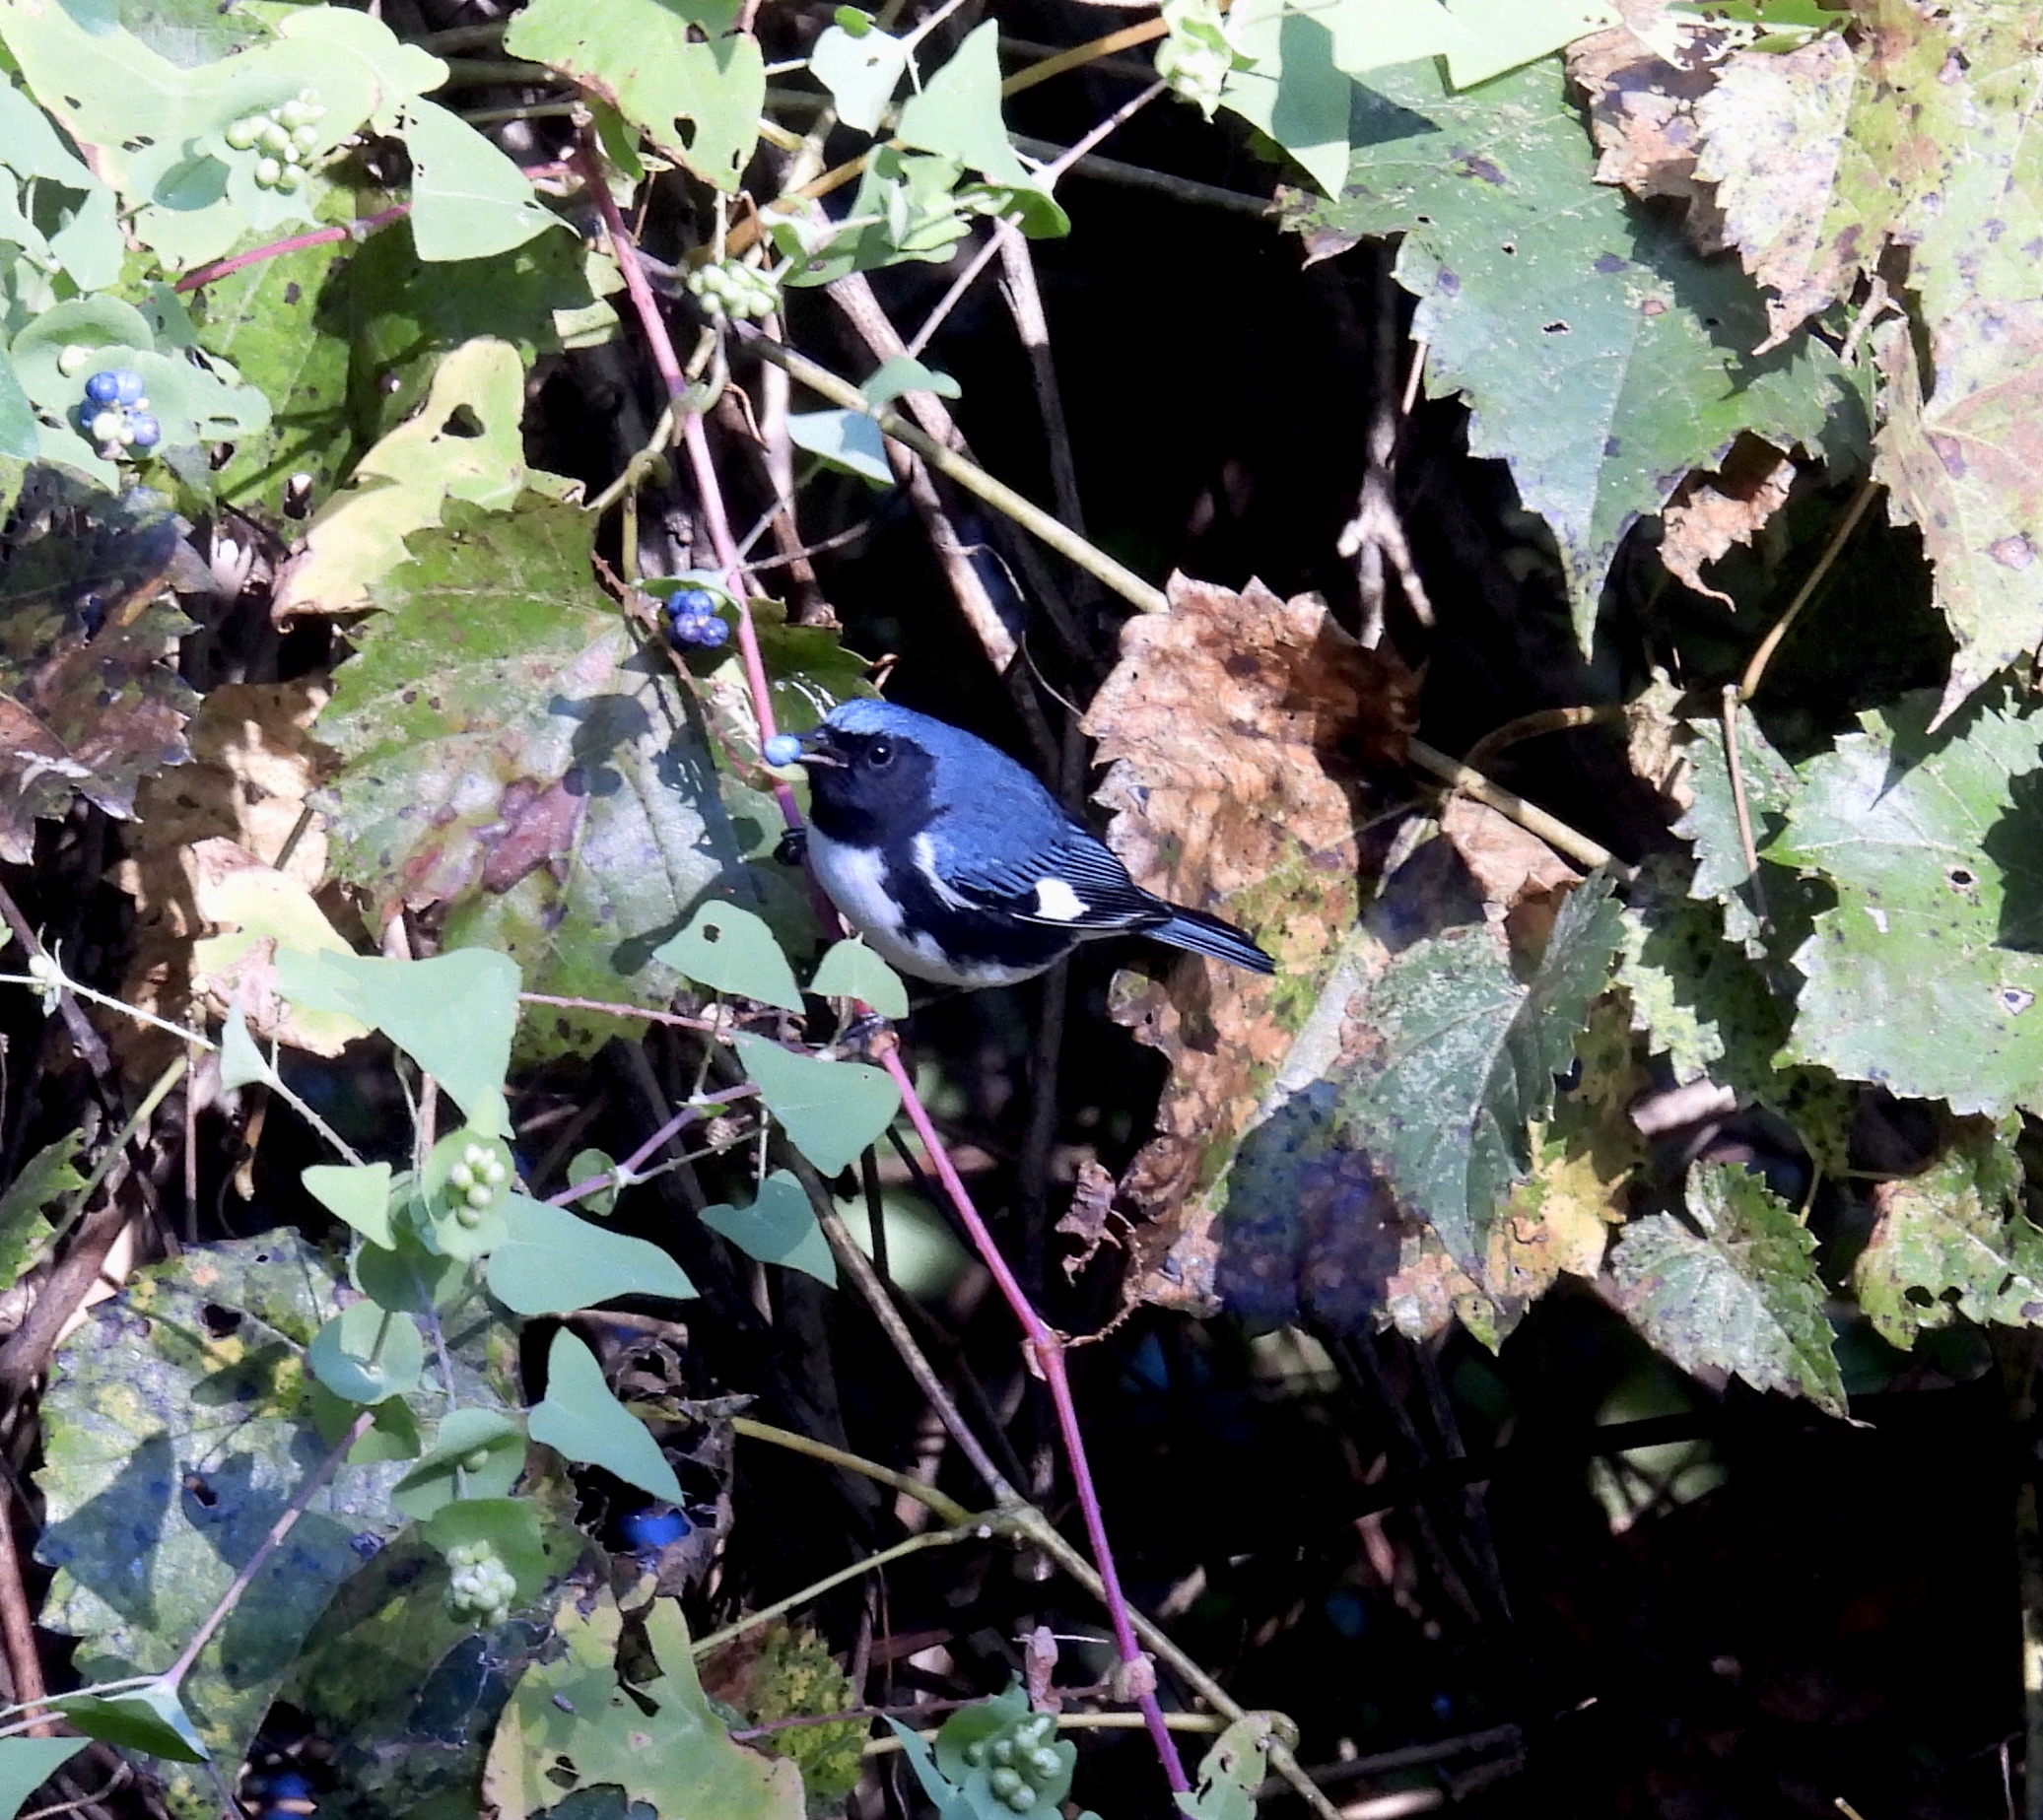 Black-throated Blue Warbler thumbnail